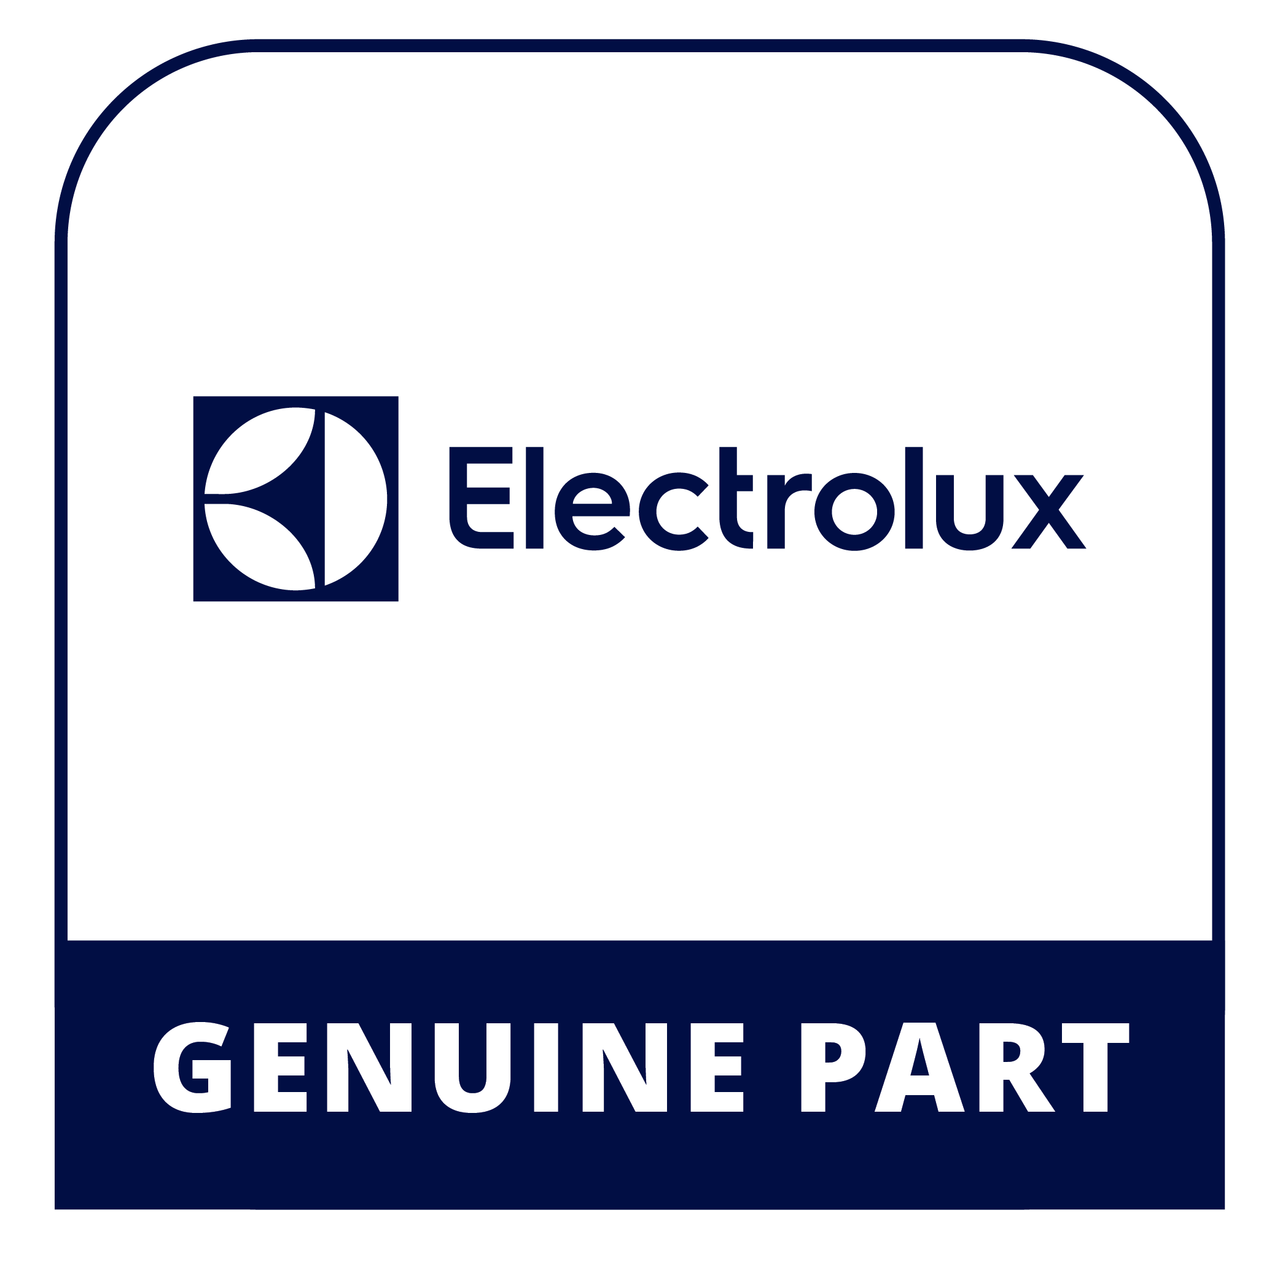 Frigidaire - Electrolux 5304459717 - Capacitor - Genuine Electrolux Part